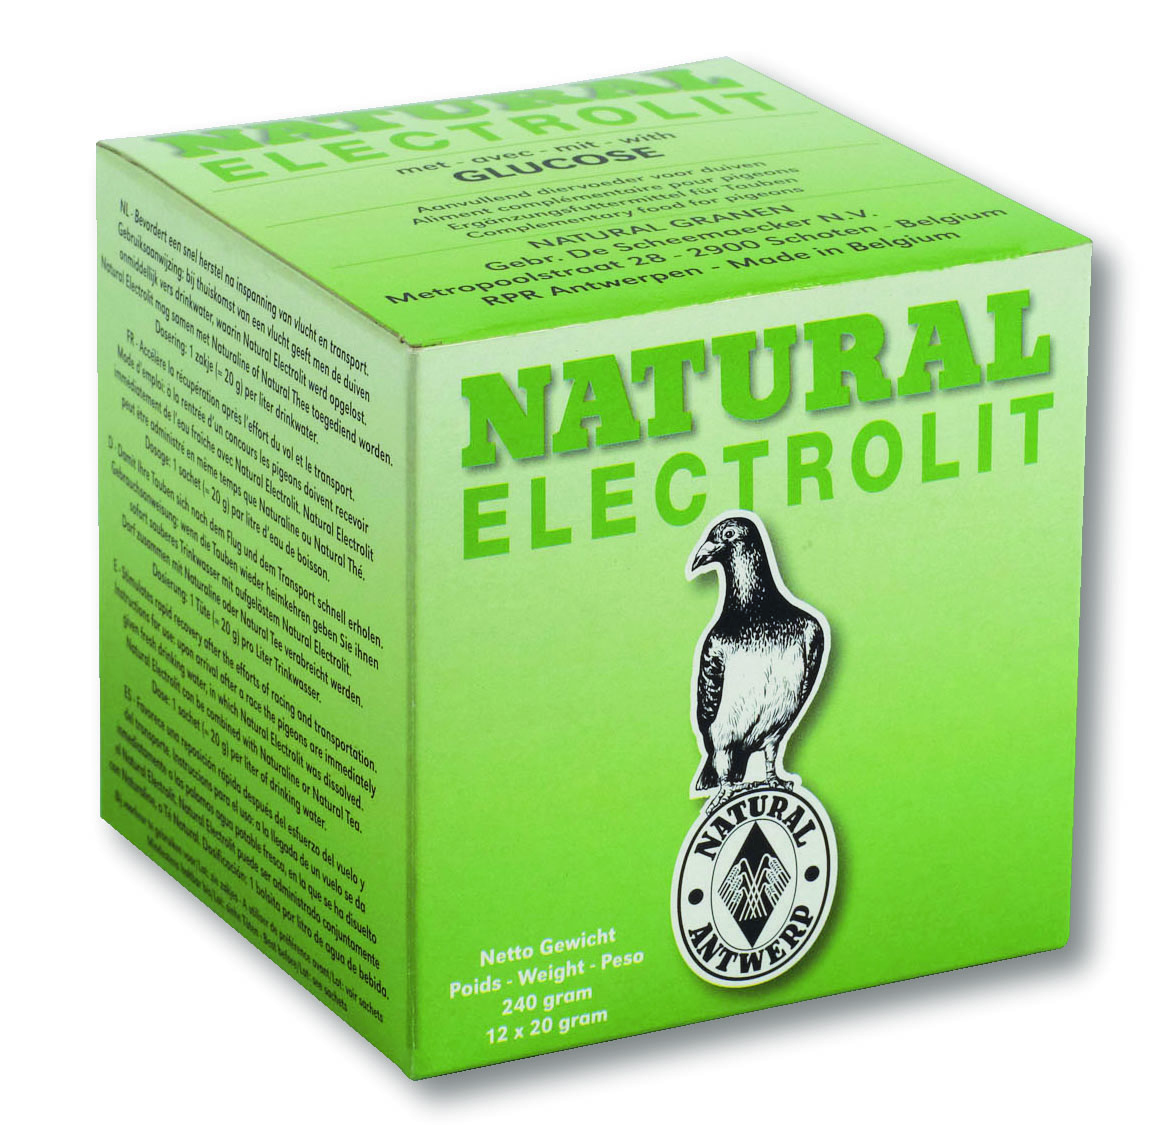 Natural electrolit 10pcs - Product shot